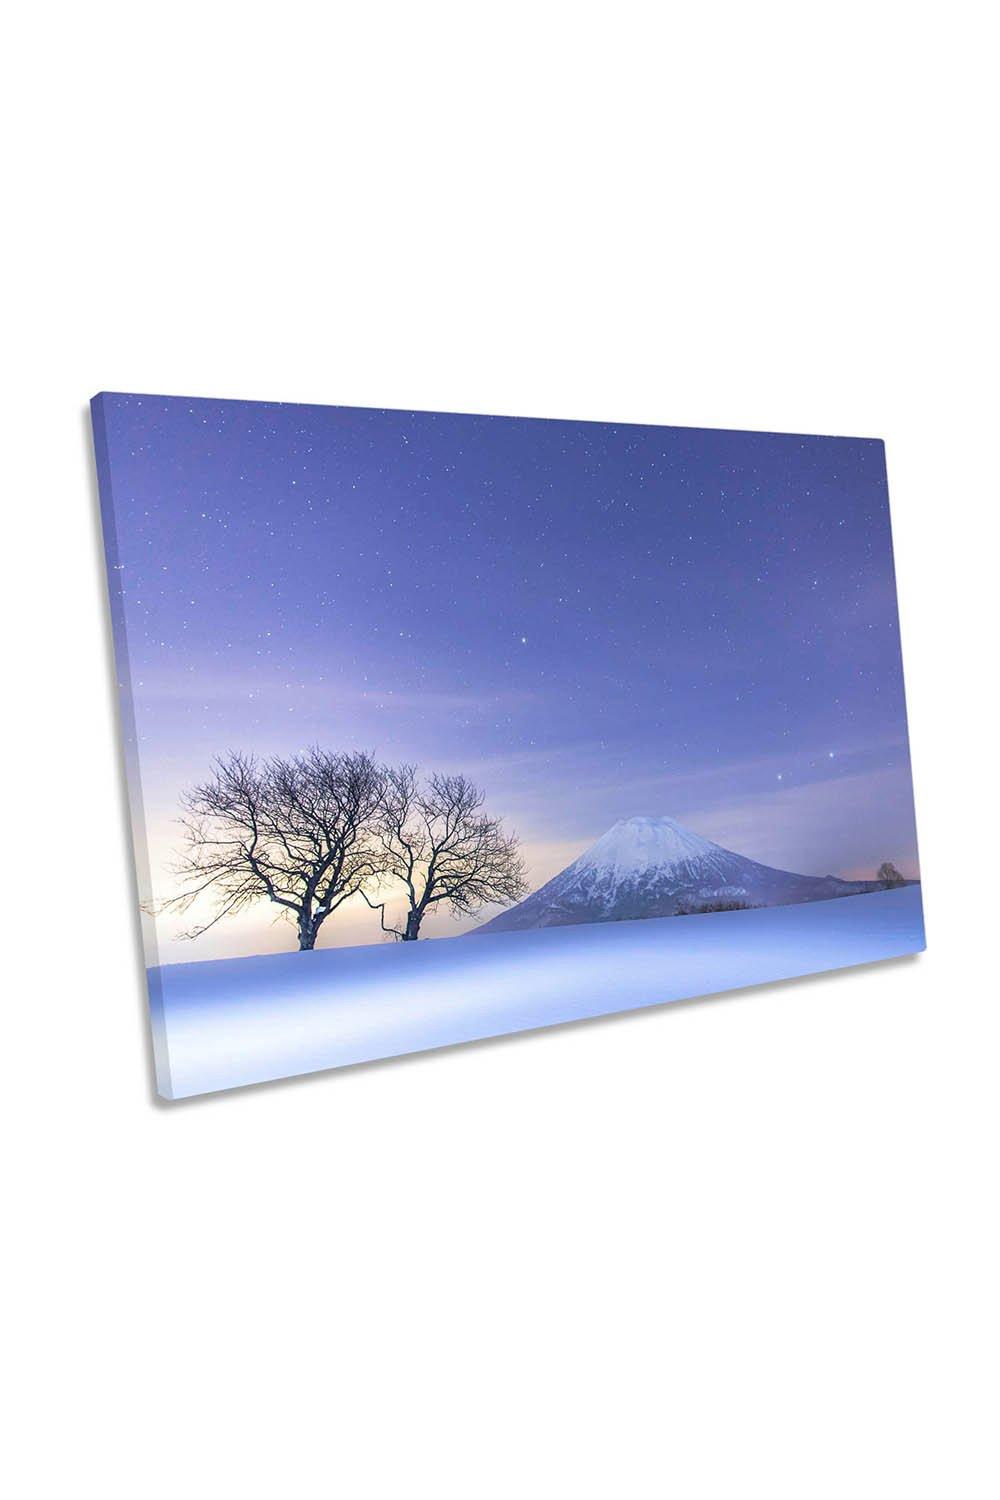 Blue Fantasy Mount Fuji Japan Canvas Wall Art Picture Print